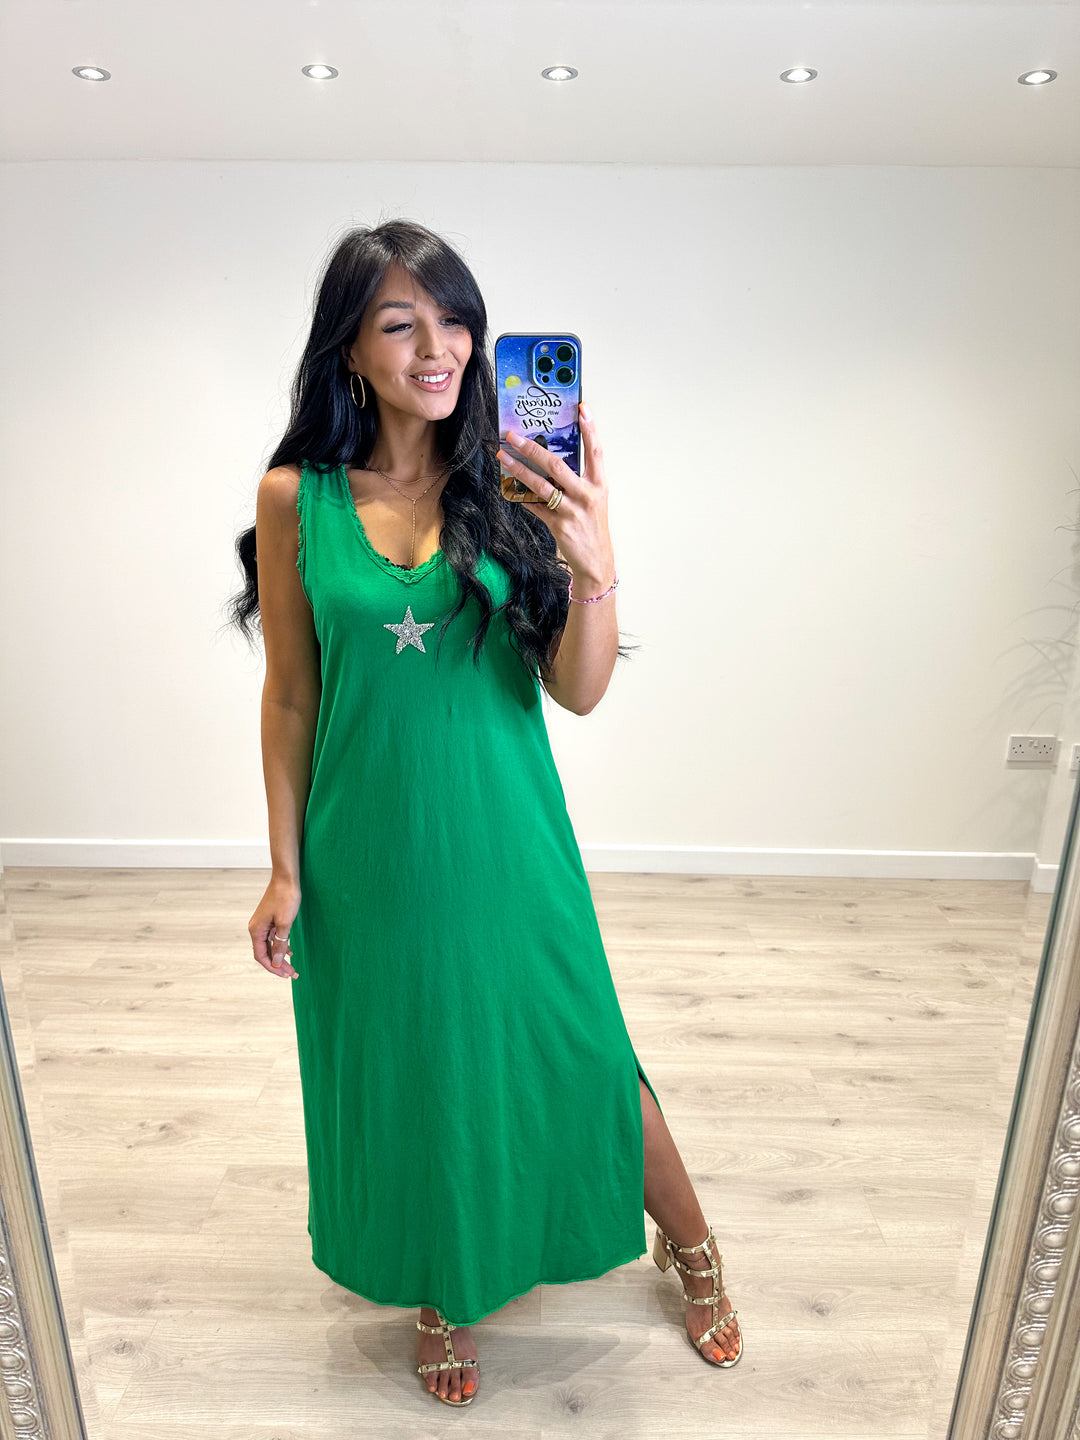 Jade Green Dress